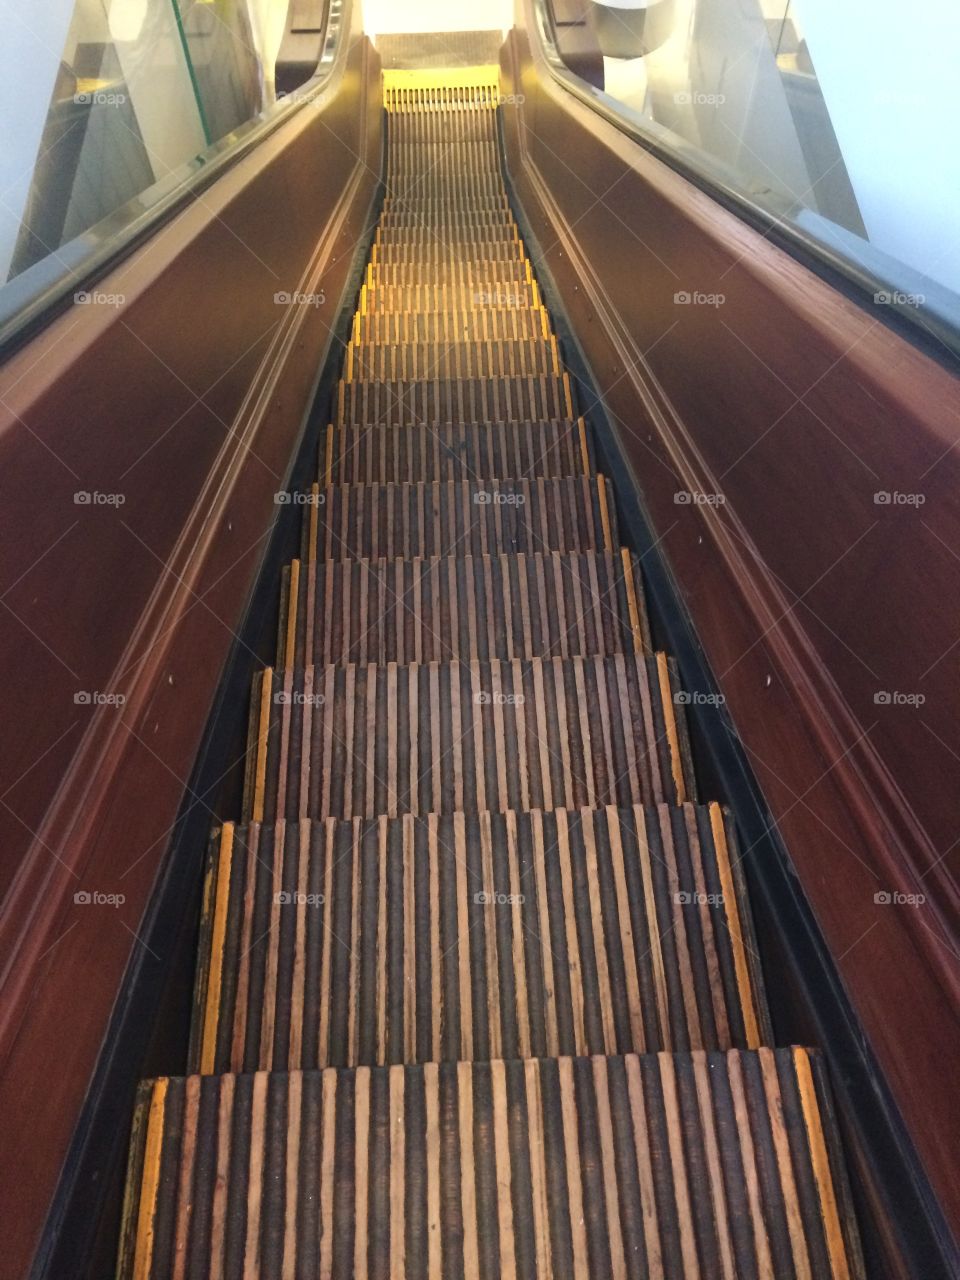 Wooden escalator